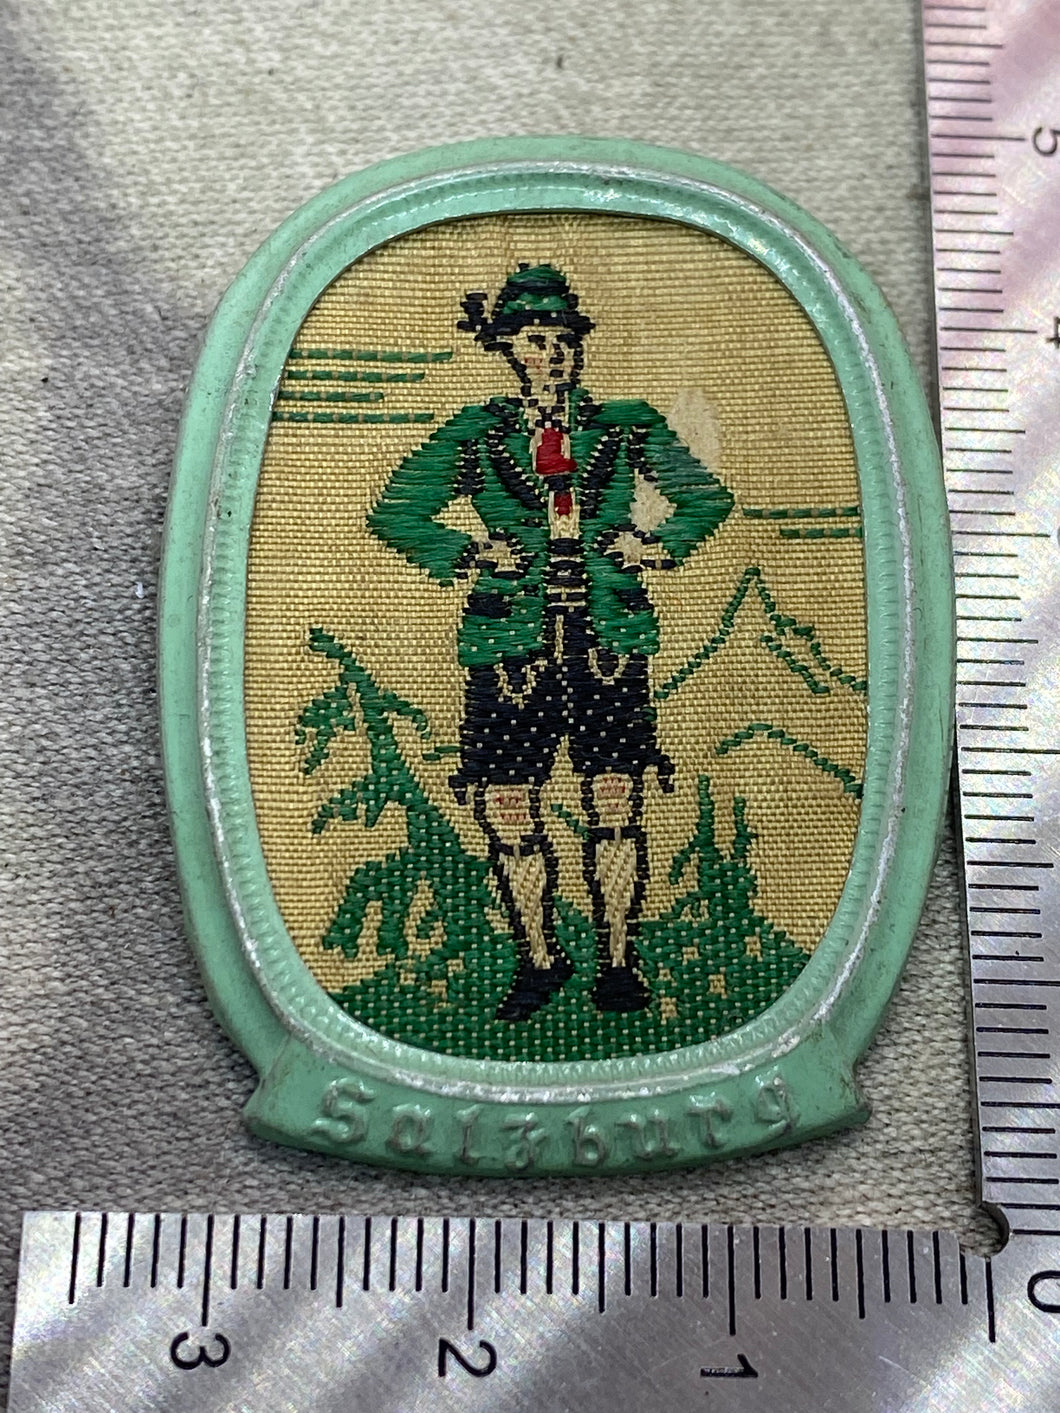 Original WW2 German Party / Day Badge for Salzburg.